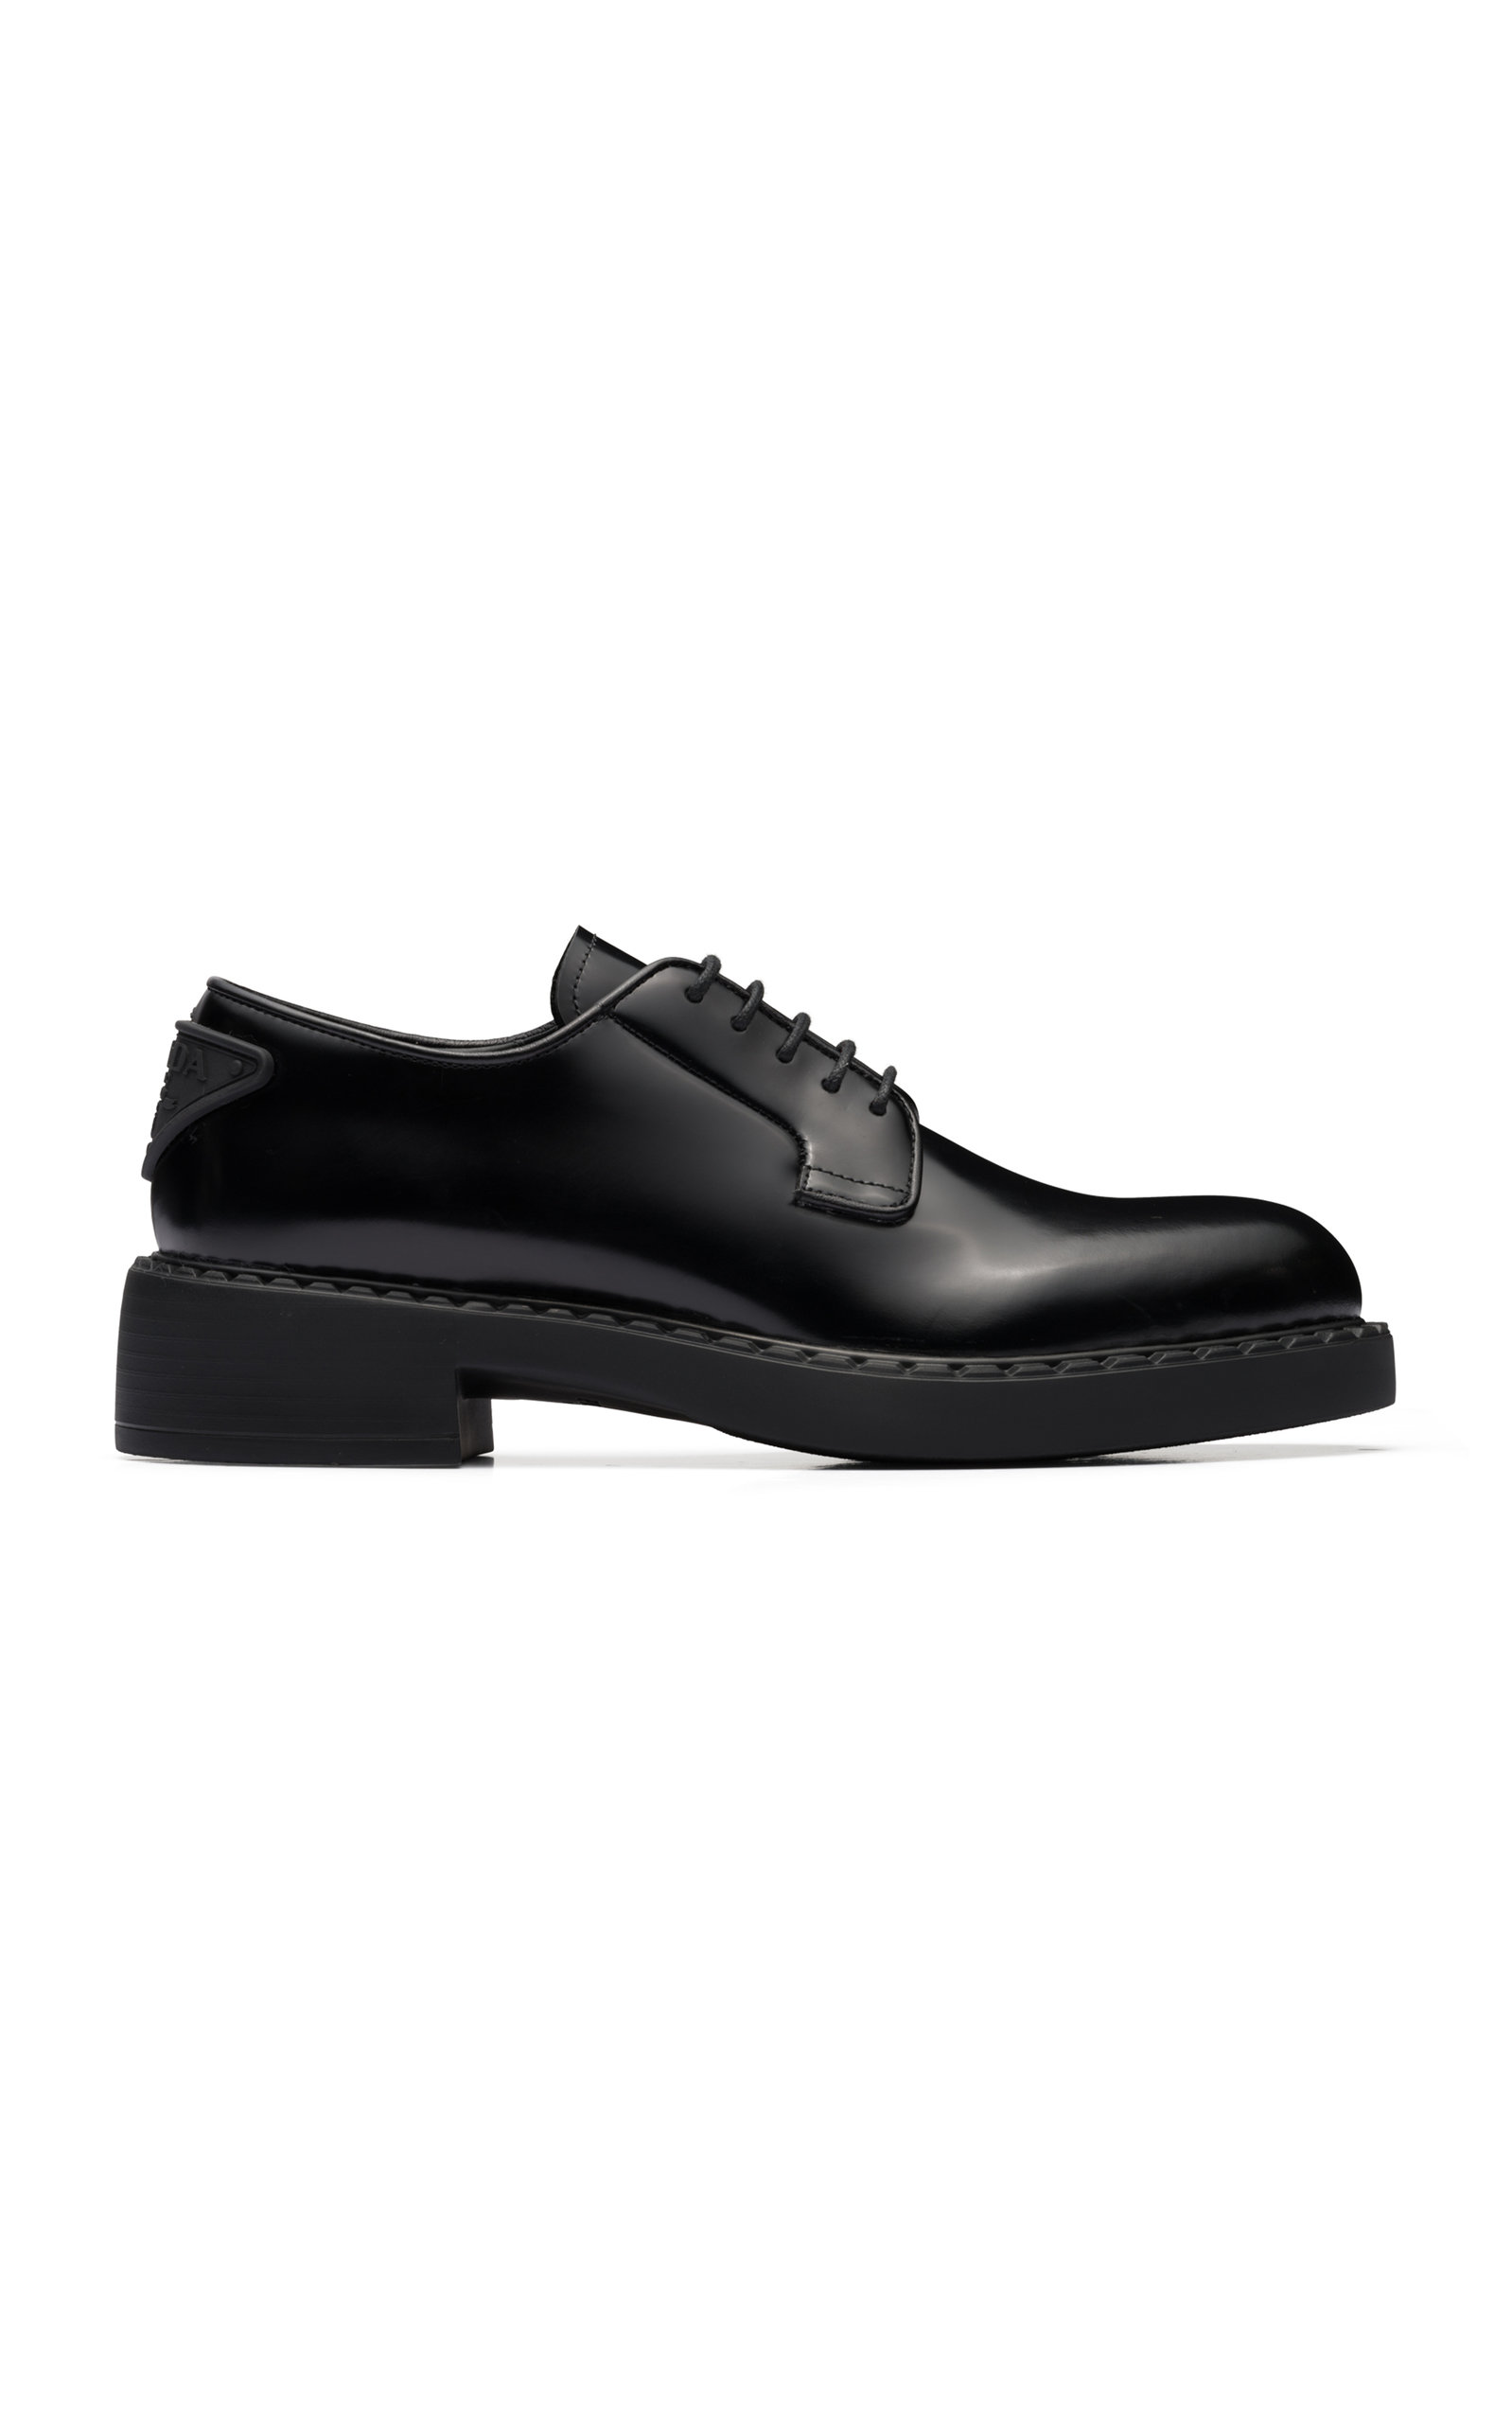 Prada - Logo-Detailed Leather Oxford Loafers - Black - IT 37 - Moda Operandi